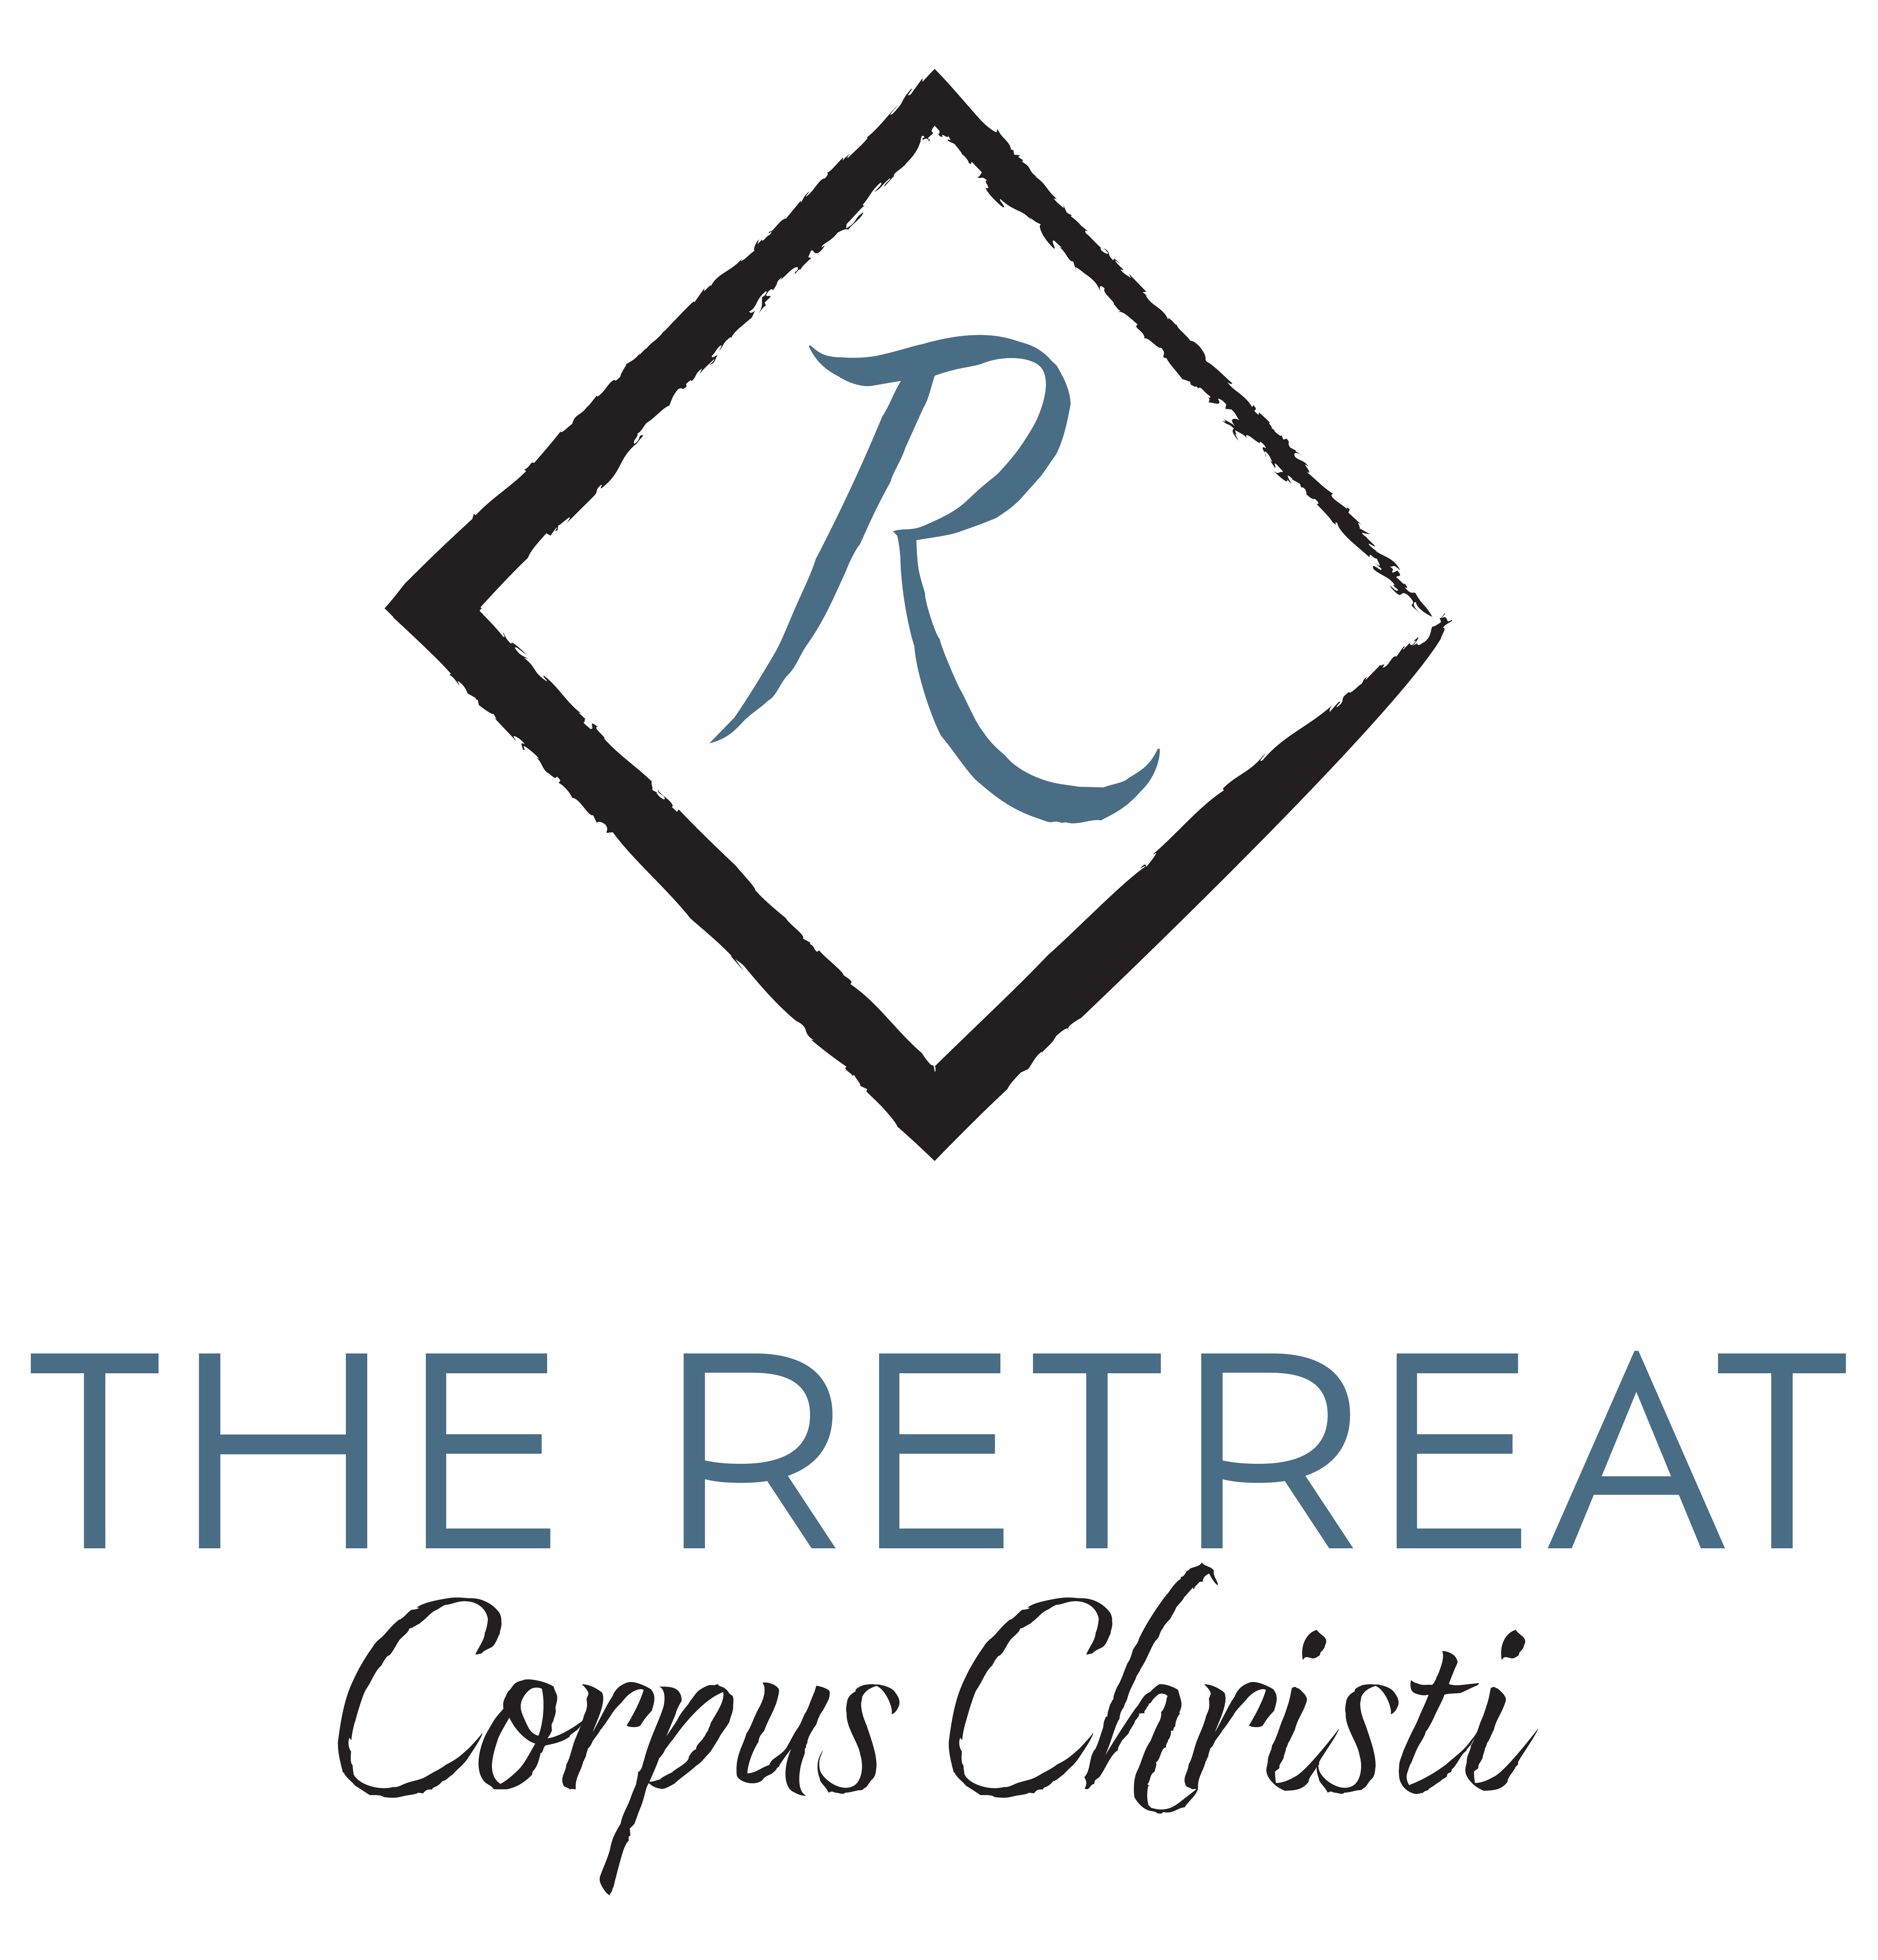 The Retreat Logo